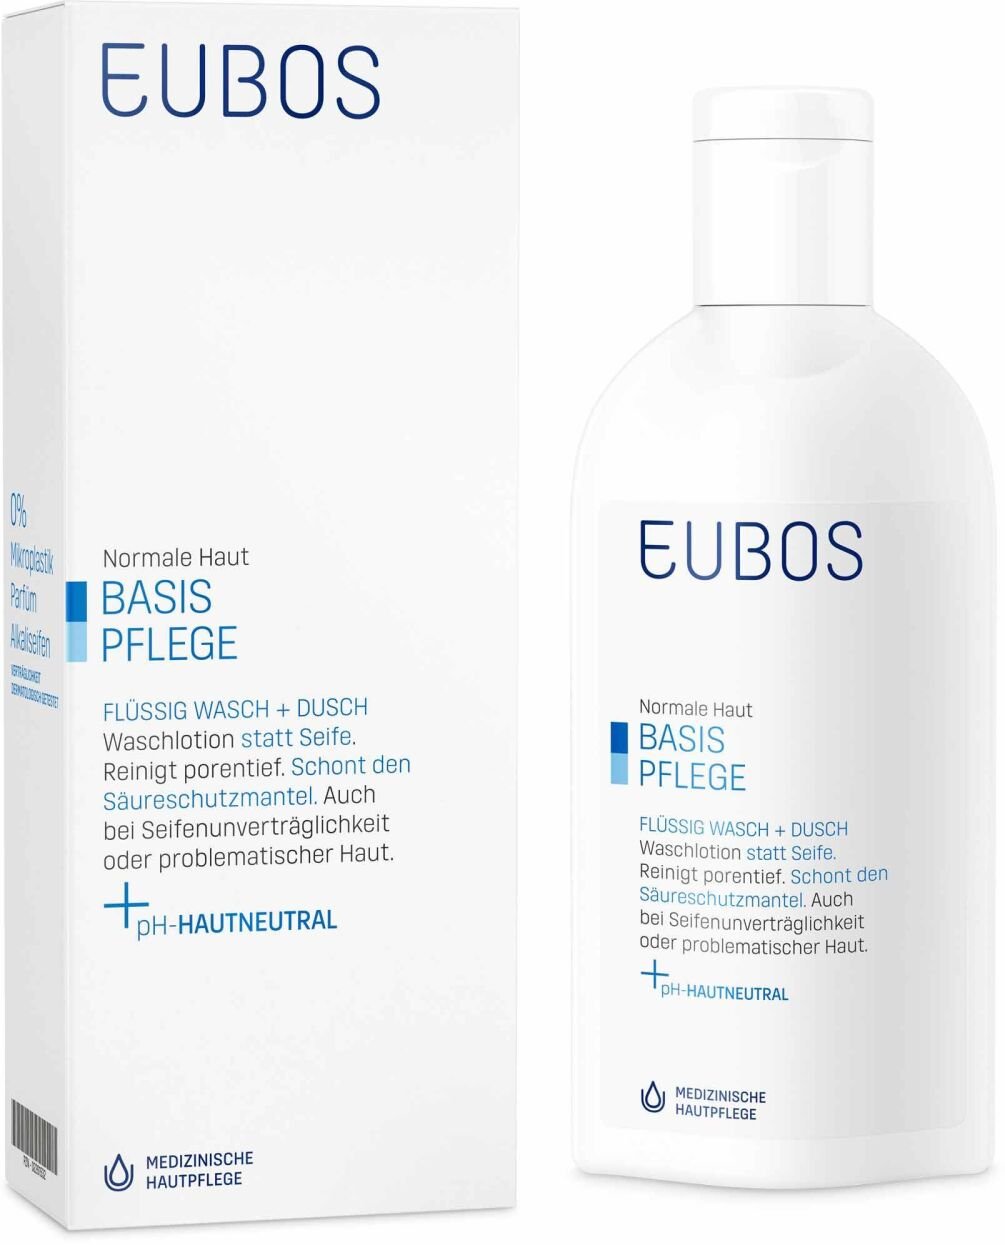 Eubos Liquid Blue Wash&Shower 200ml - sprchový gél